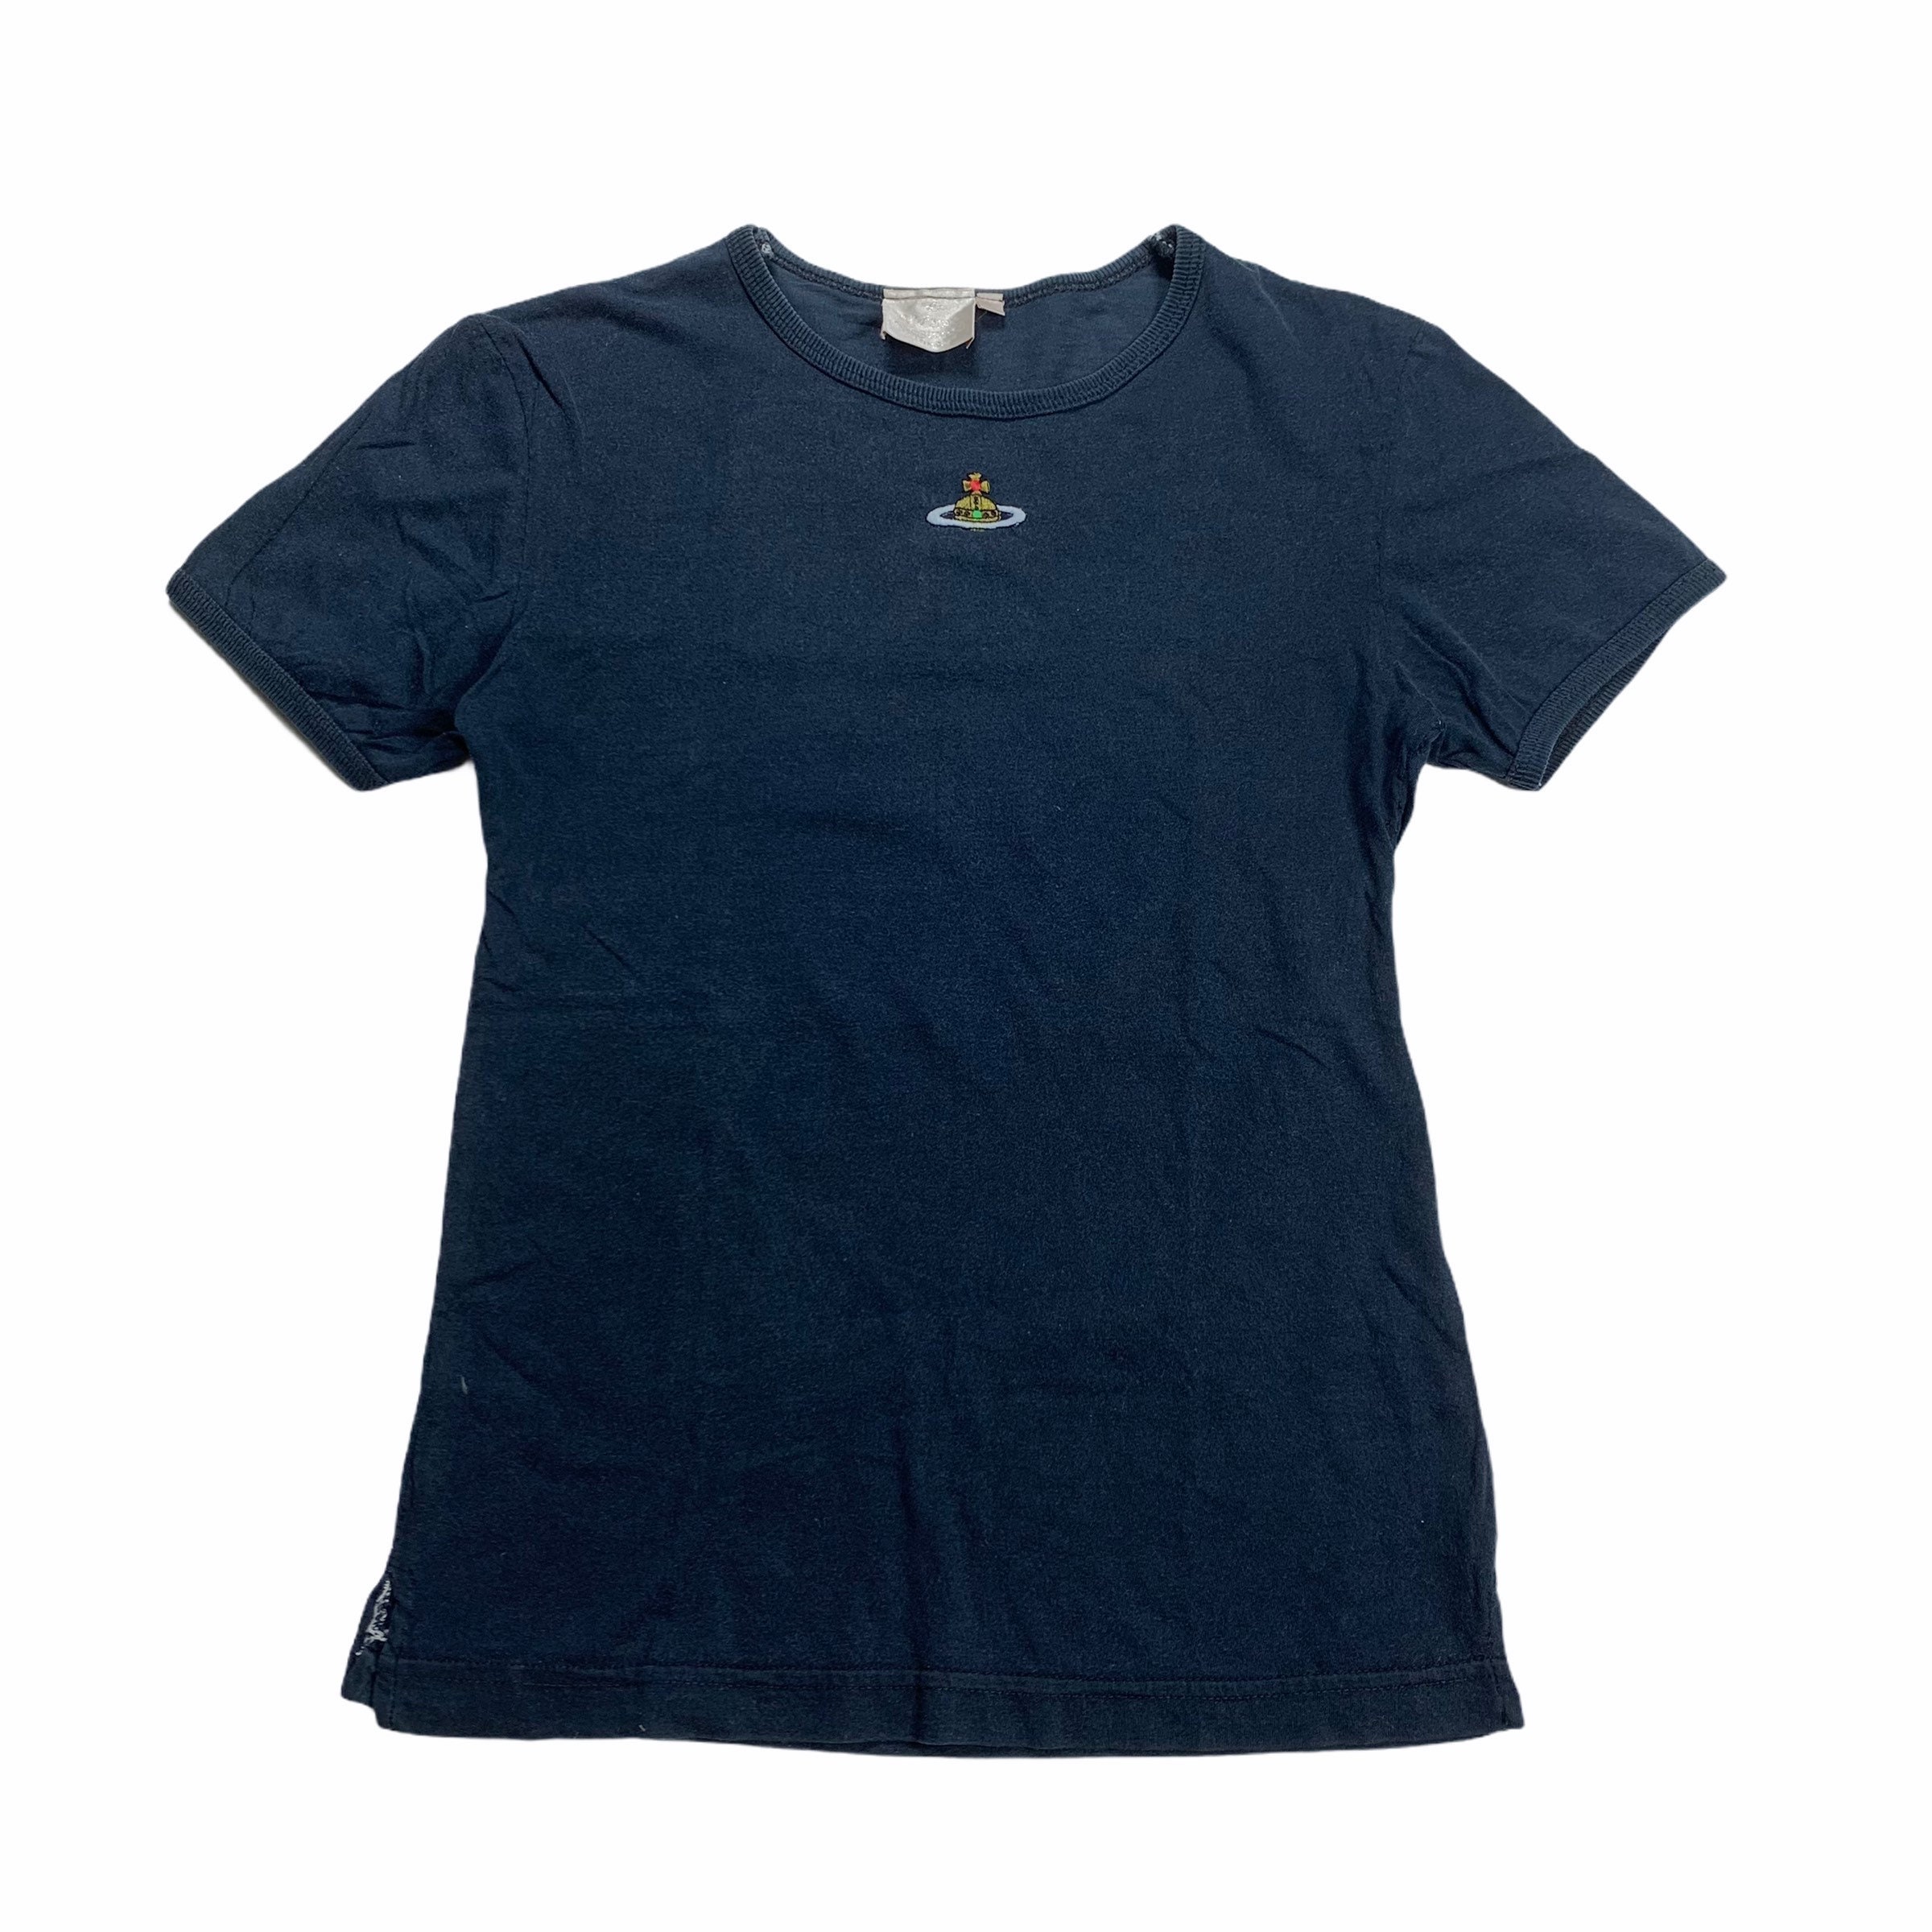 Vivienne Westwood T Shirt Etsy